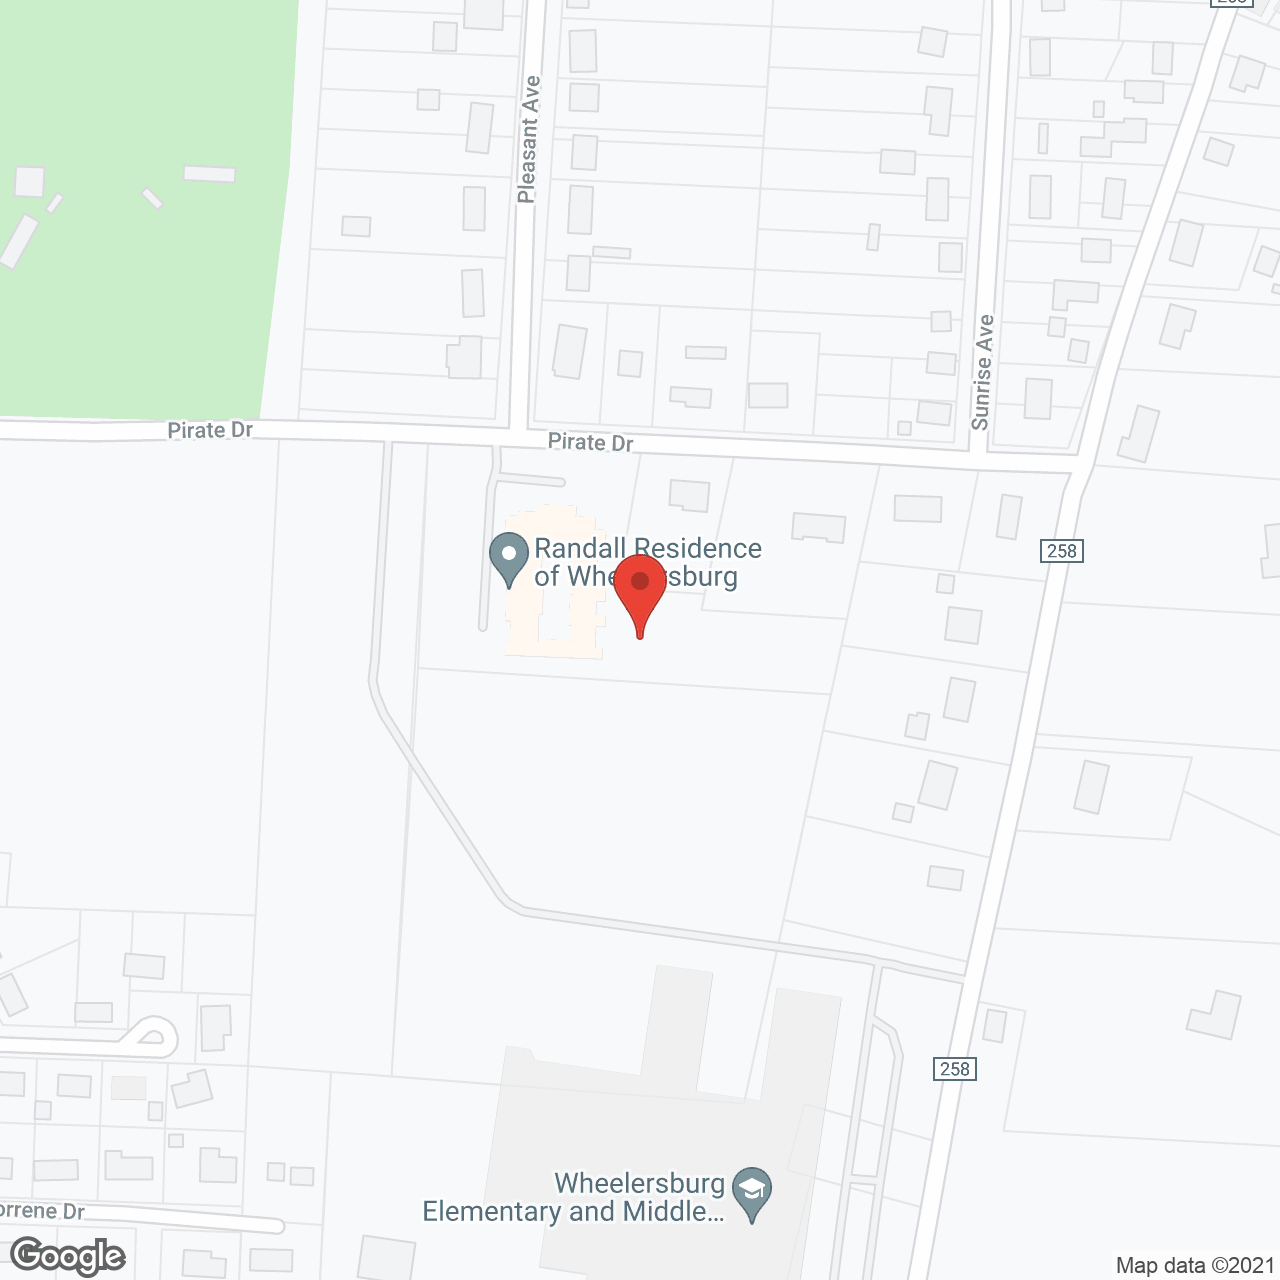 Randall Residence of Wheelersburg in google map